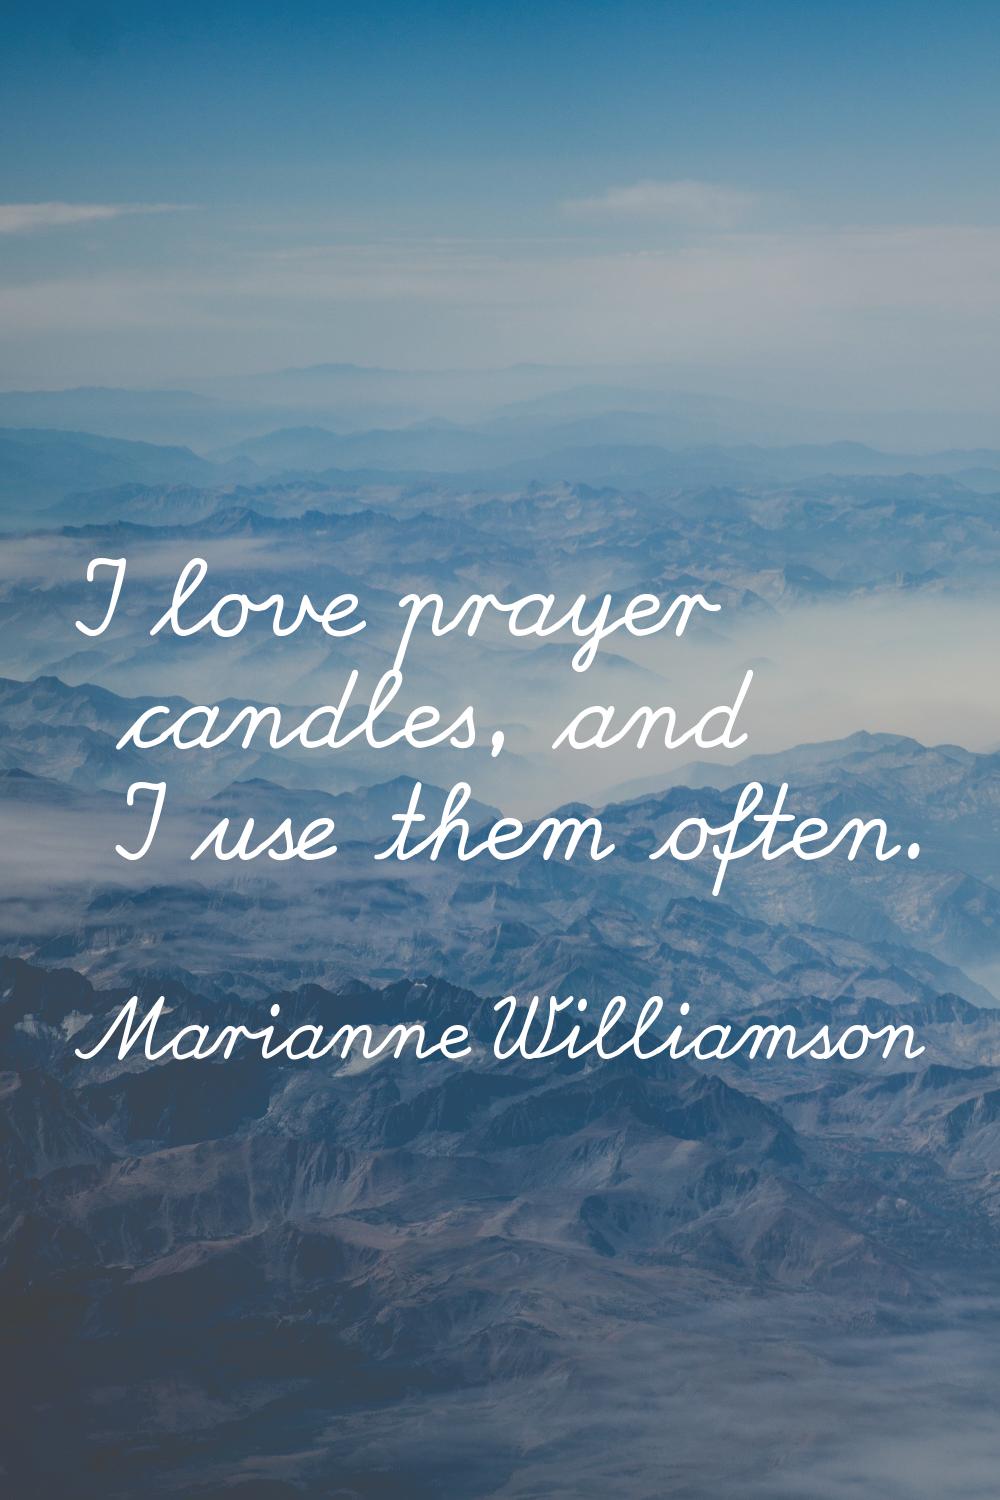 I love prayer candles, and I use them often.